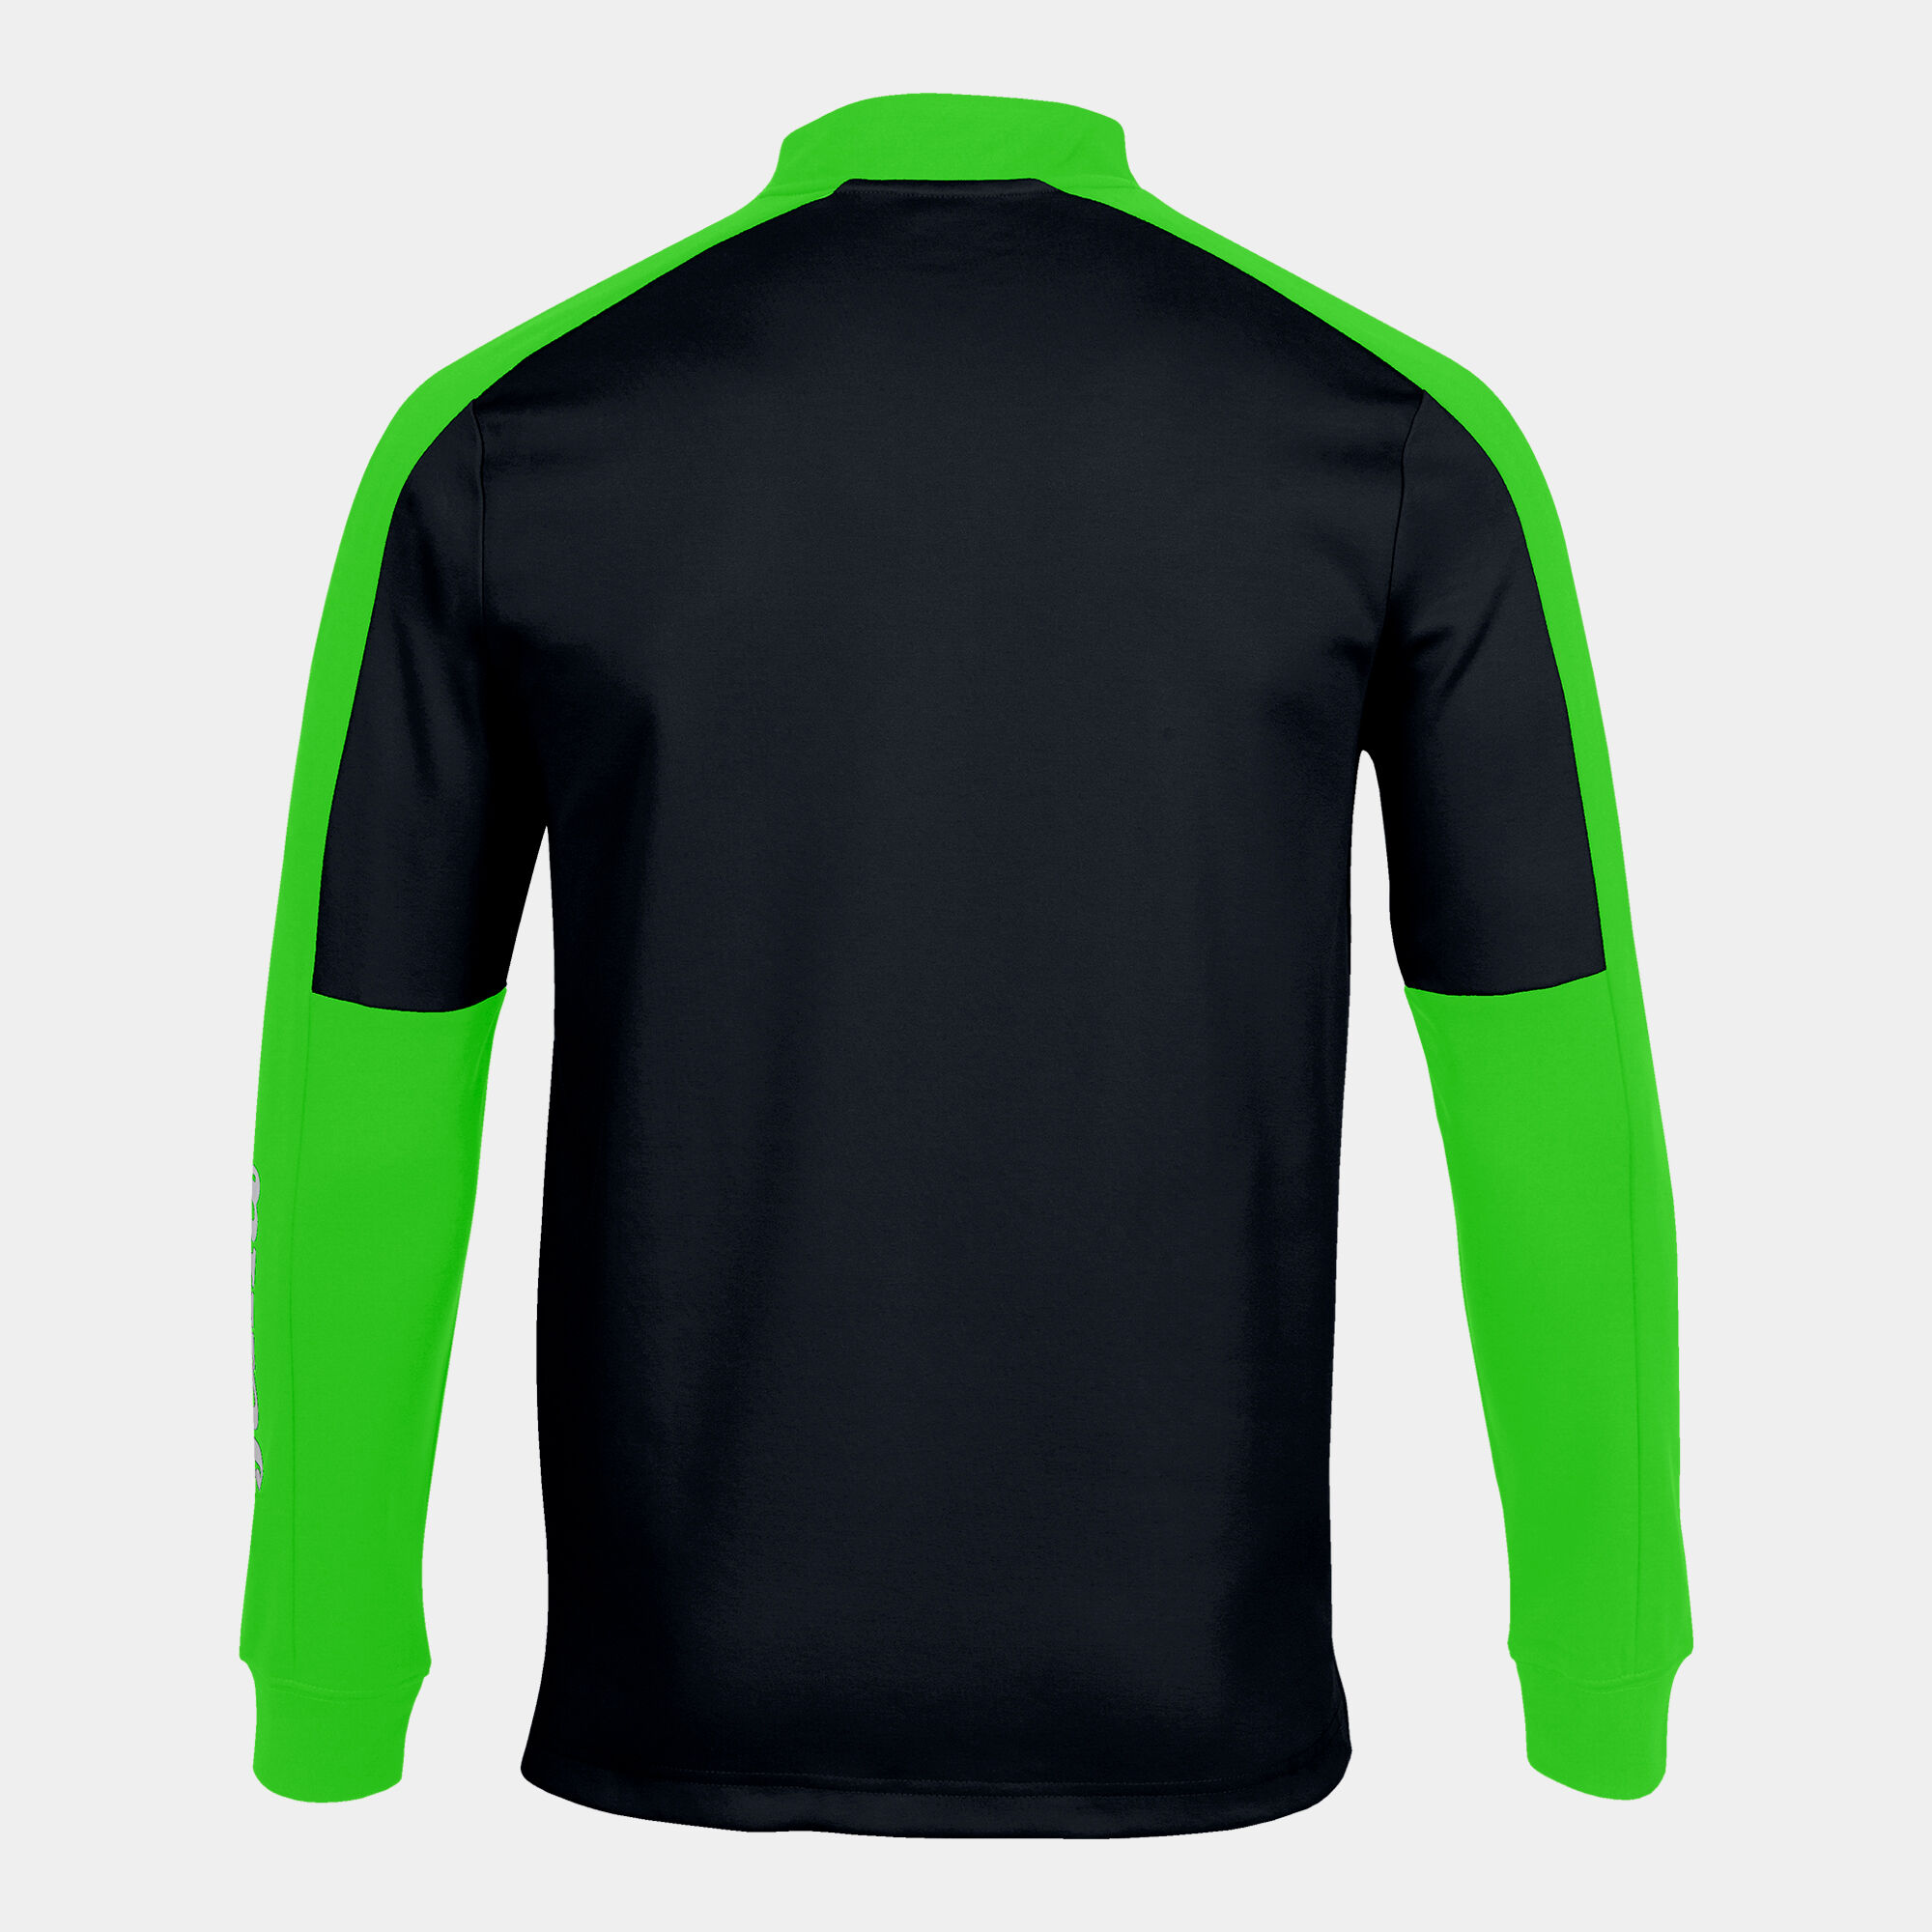 Sweat-shirt homme Eco Championship noir vert fluo